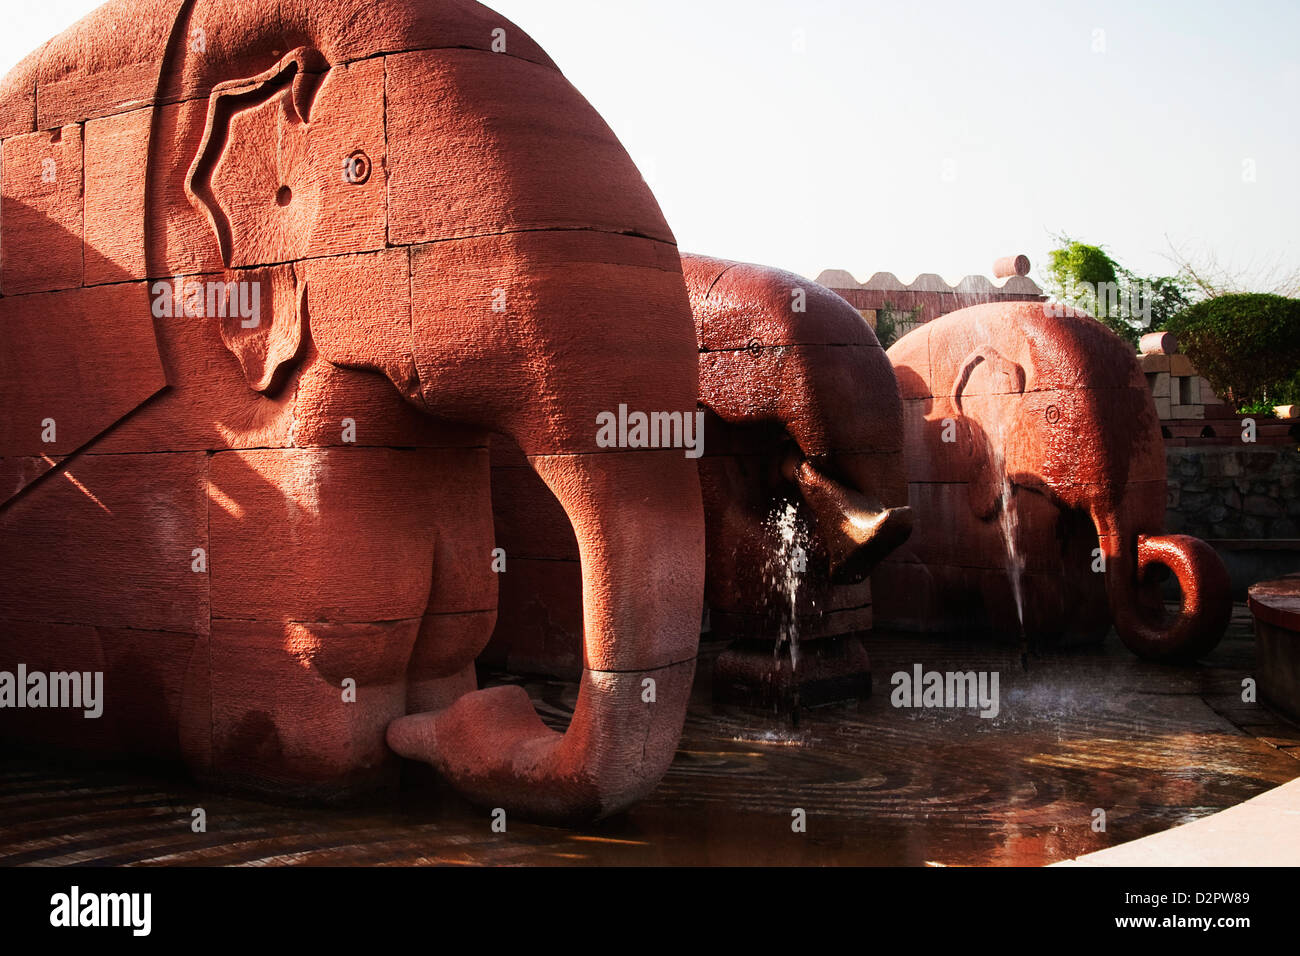 Elephant statues in a garden, Garden of Five Senses, Saidul Ajaib, New Delhi, India Stock Photo